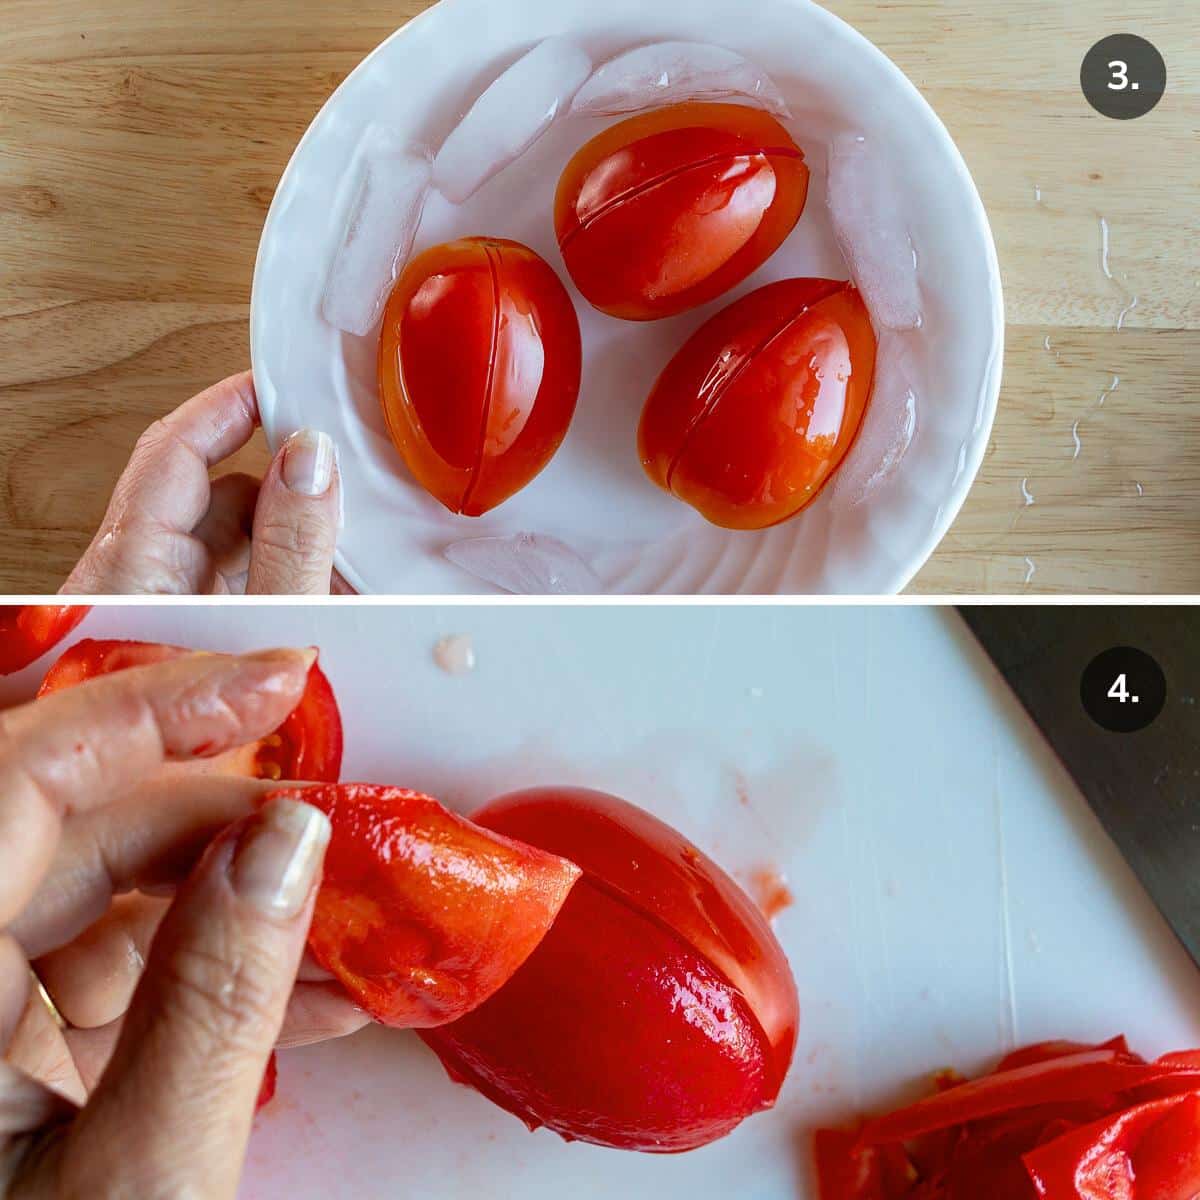 Peeling the tomatoes.